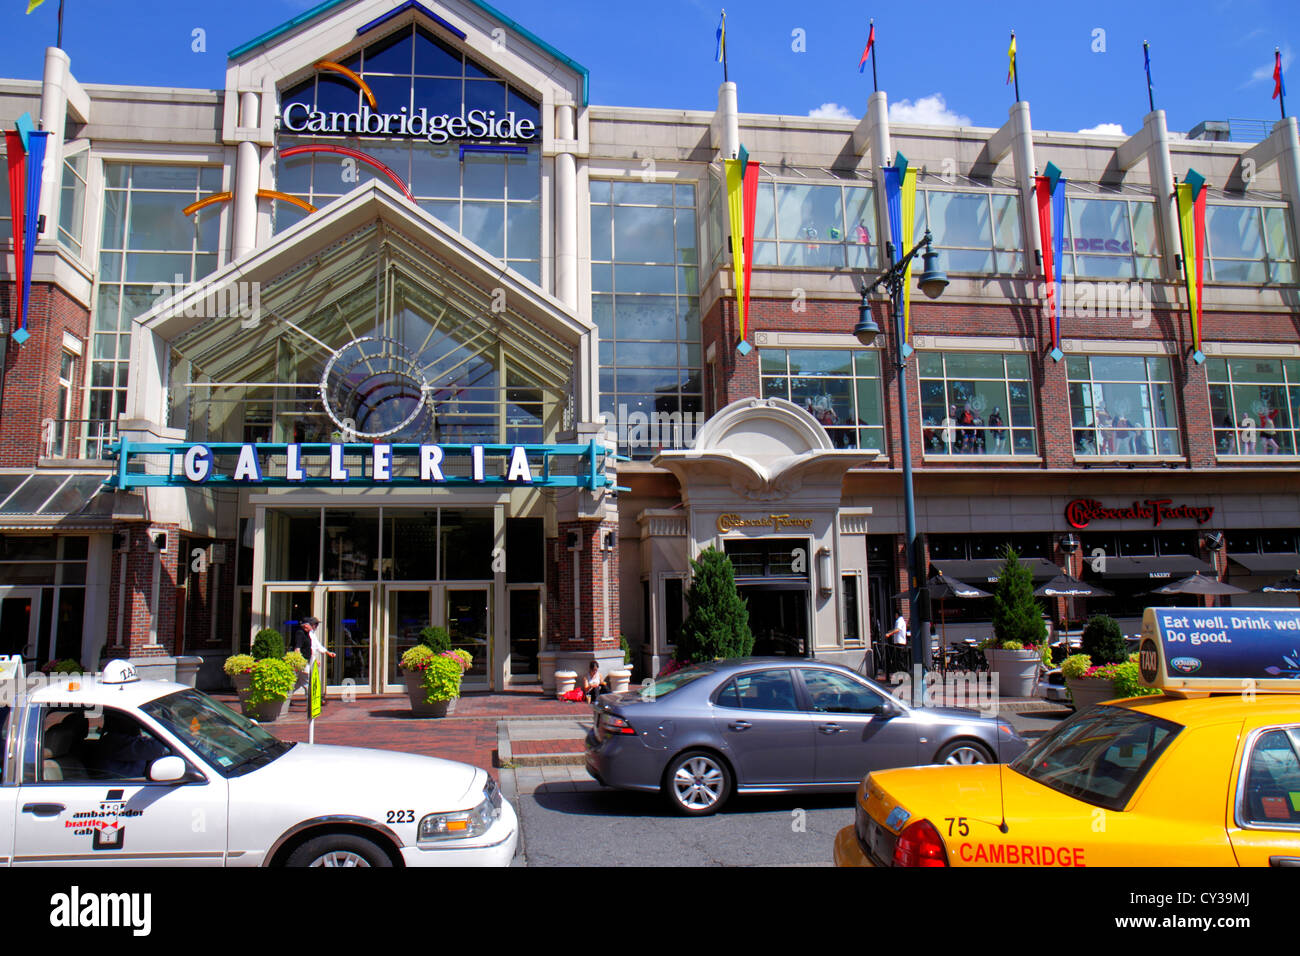 Boston Massachusetts Cambridge CambridgeSide Galleria mall shopping